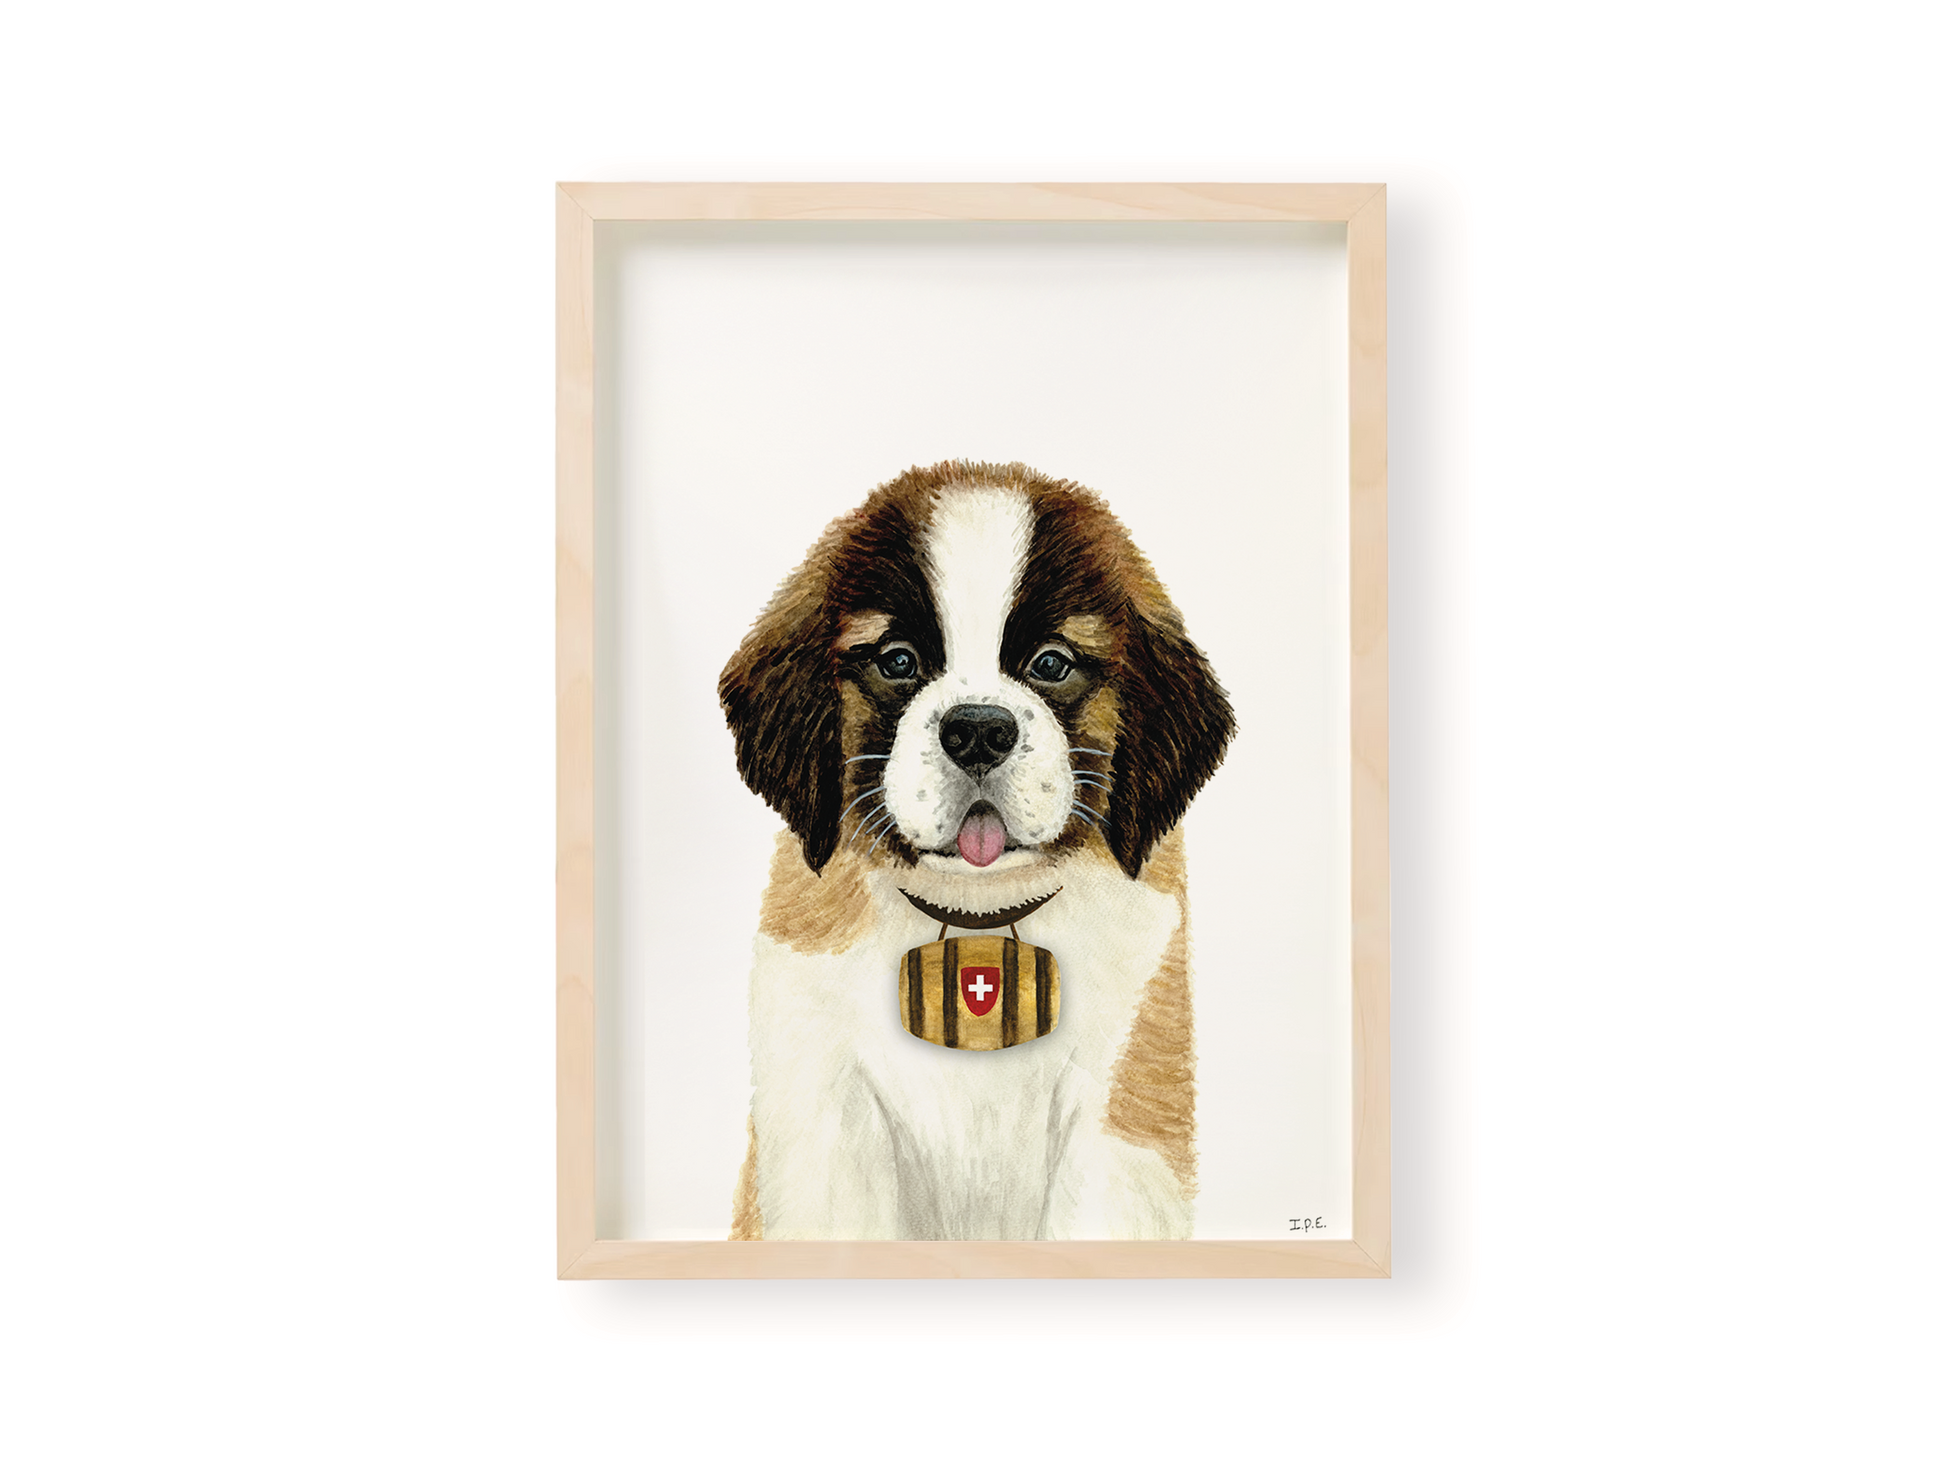 St. bernard with barrel Swiss dog print in wooden frame